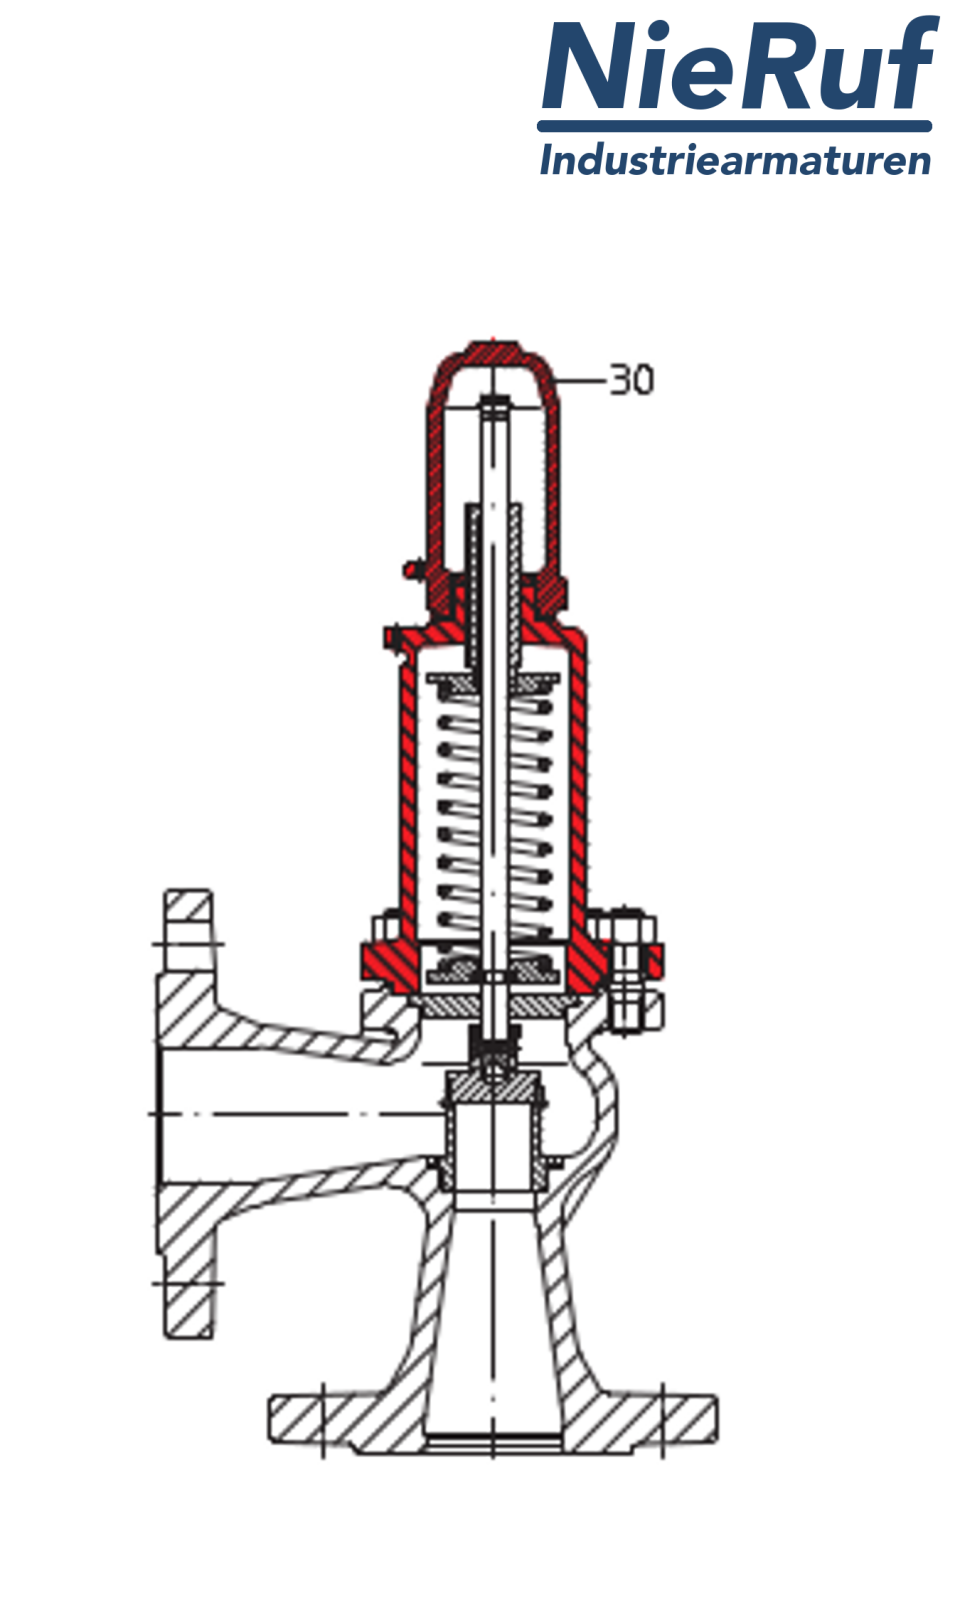 flange-safety valve DN32/DN32 SF0201, cast steel 1.0619+N FPM, without lever